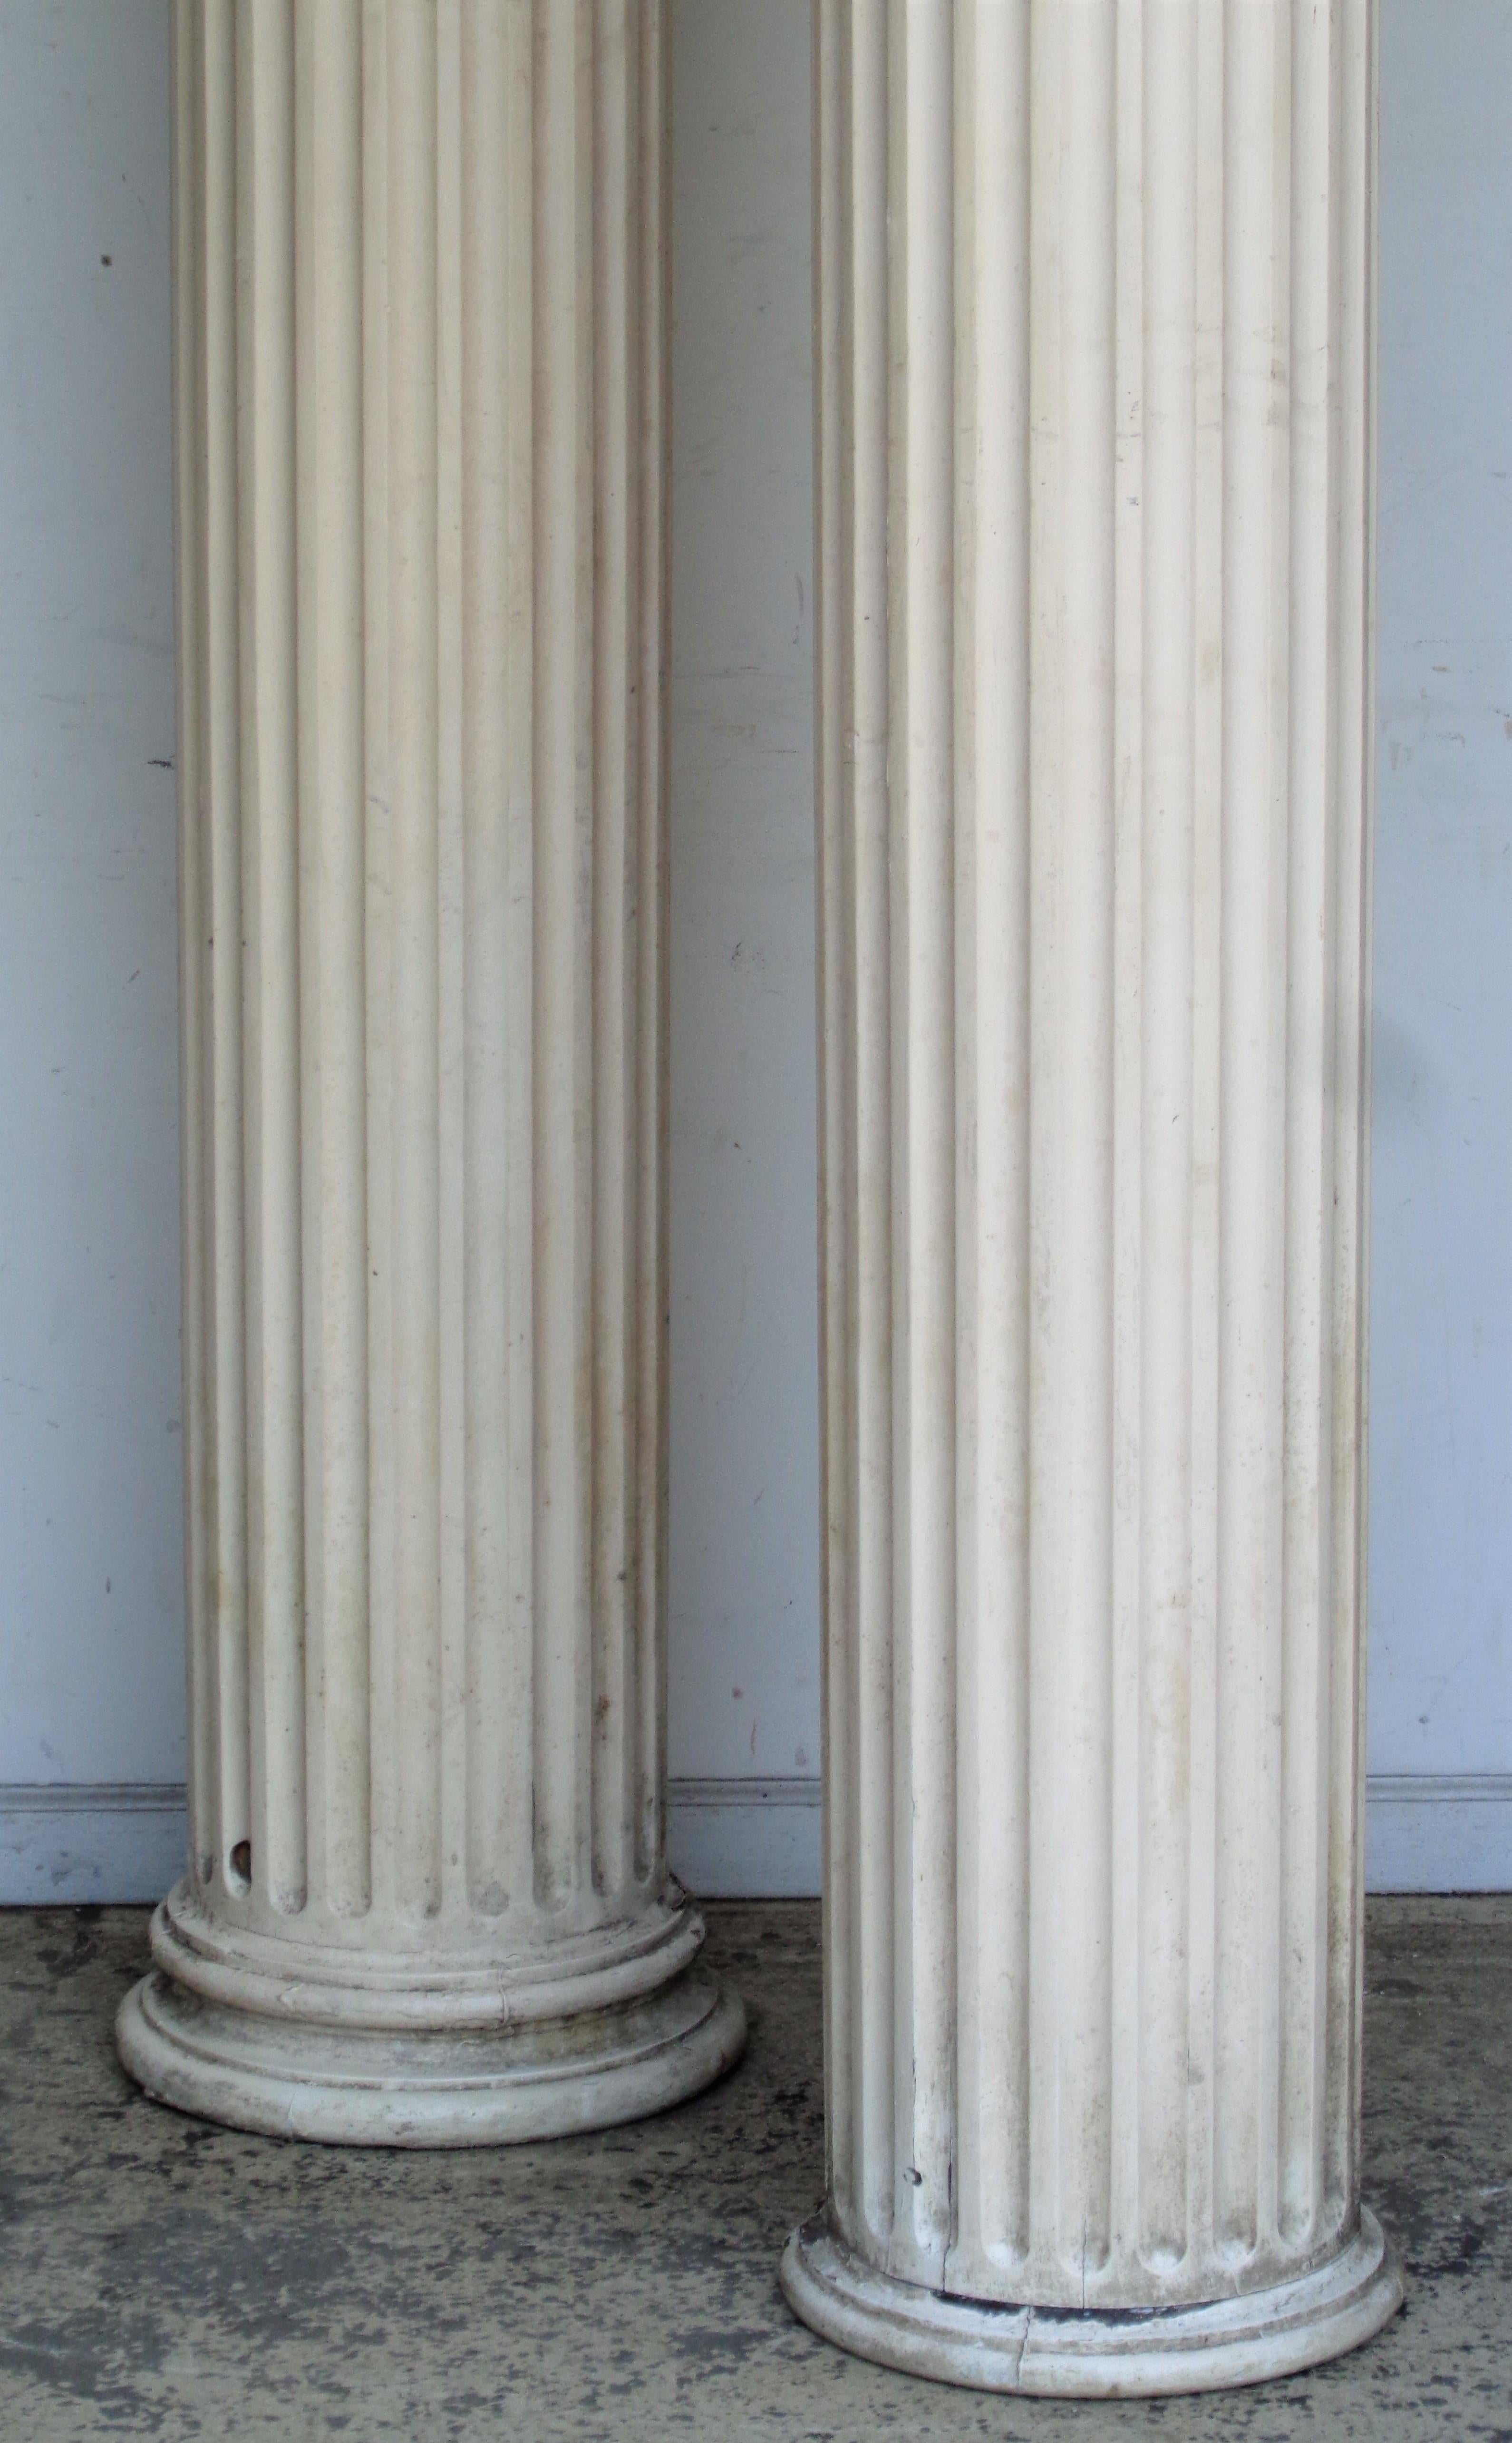 Antique Fluted Columns - 5 For Sale on 1stDibs